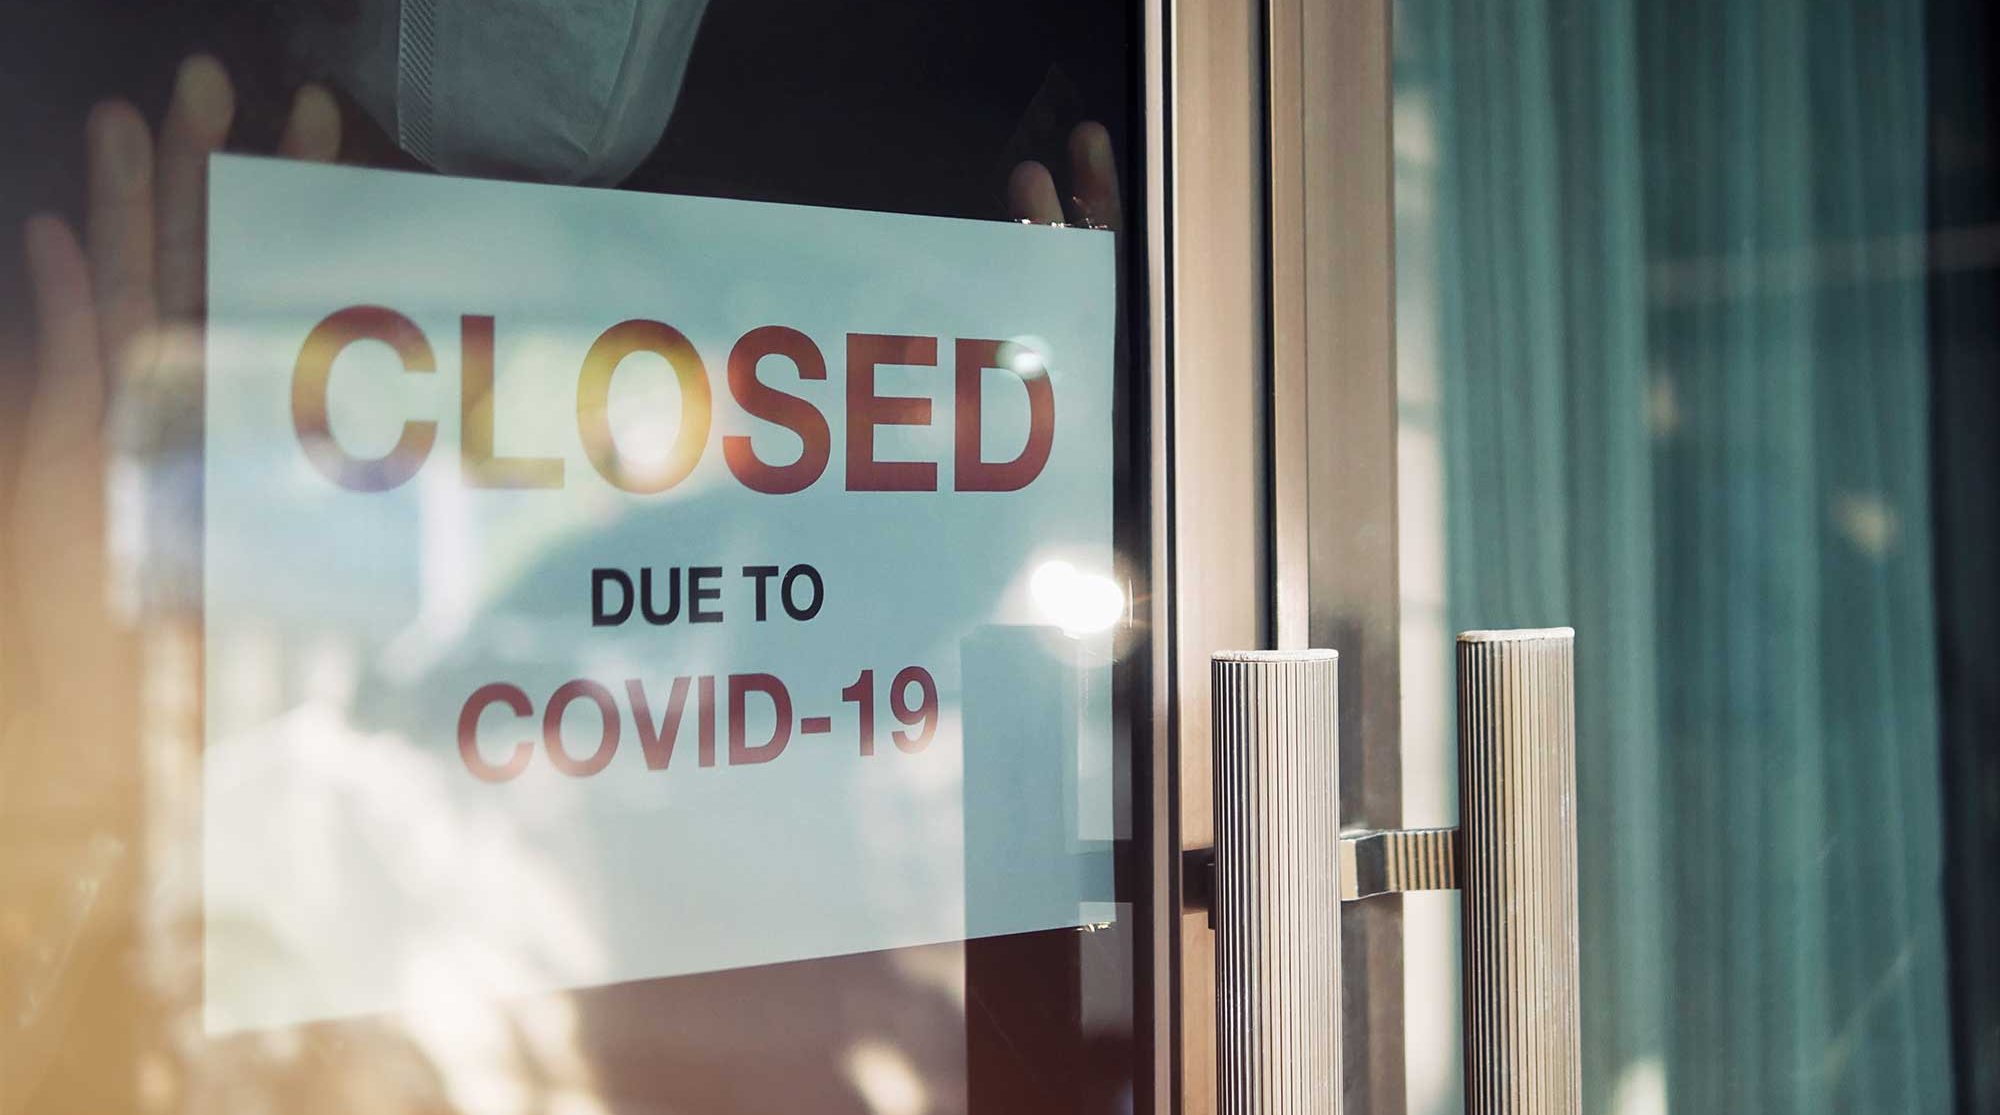 COVID-19 closed sign